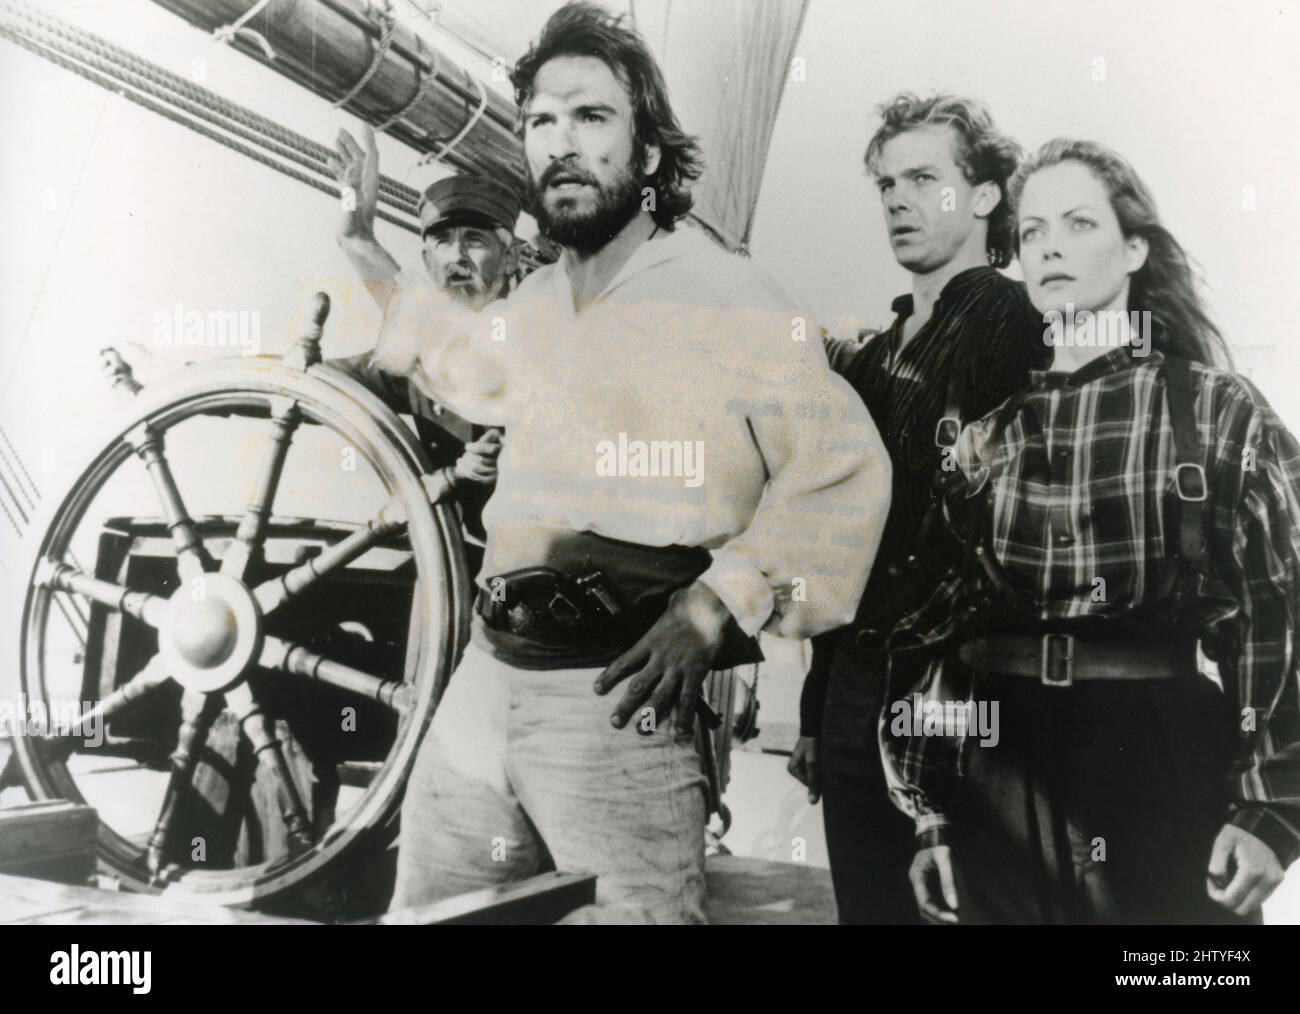 L'attore americano Tommy Lee Jones, Michael o'Keefe e Jenny Seagrove nel film Nate and Hayes, USA 1983 Foto Stock